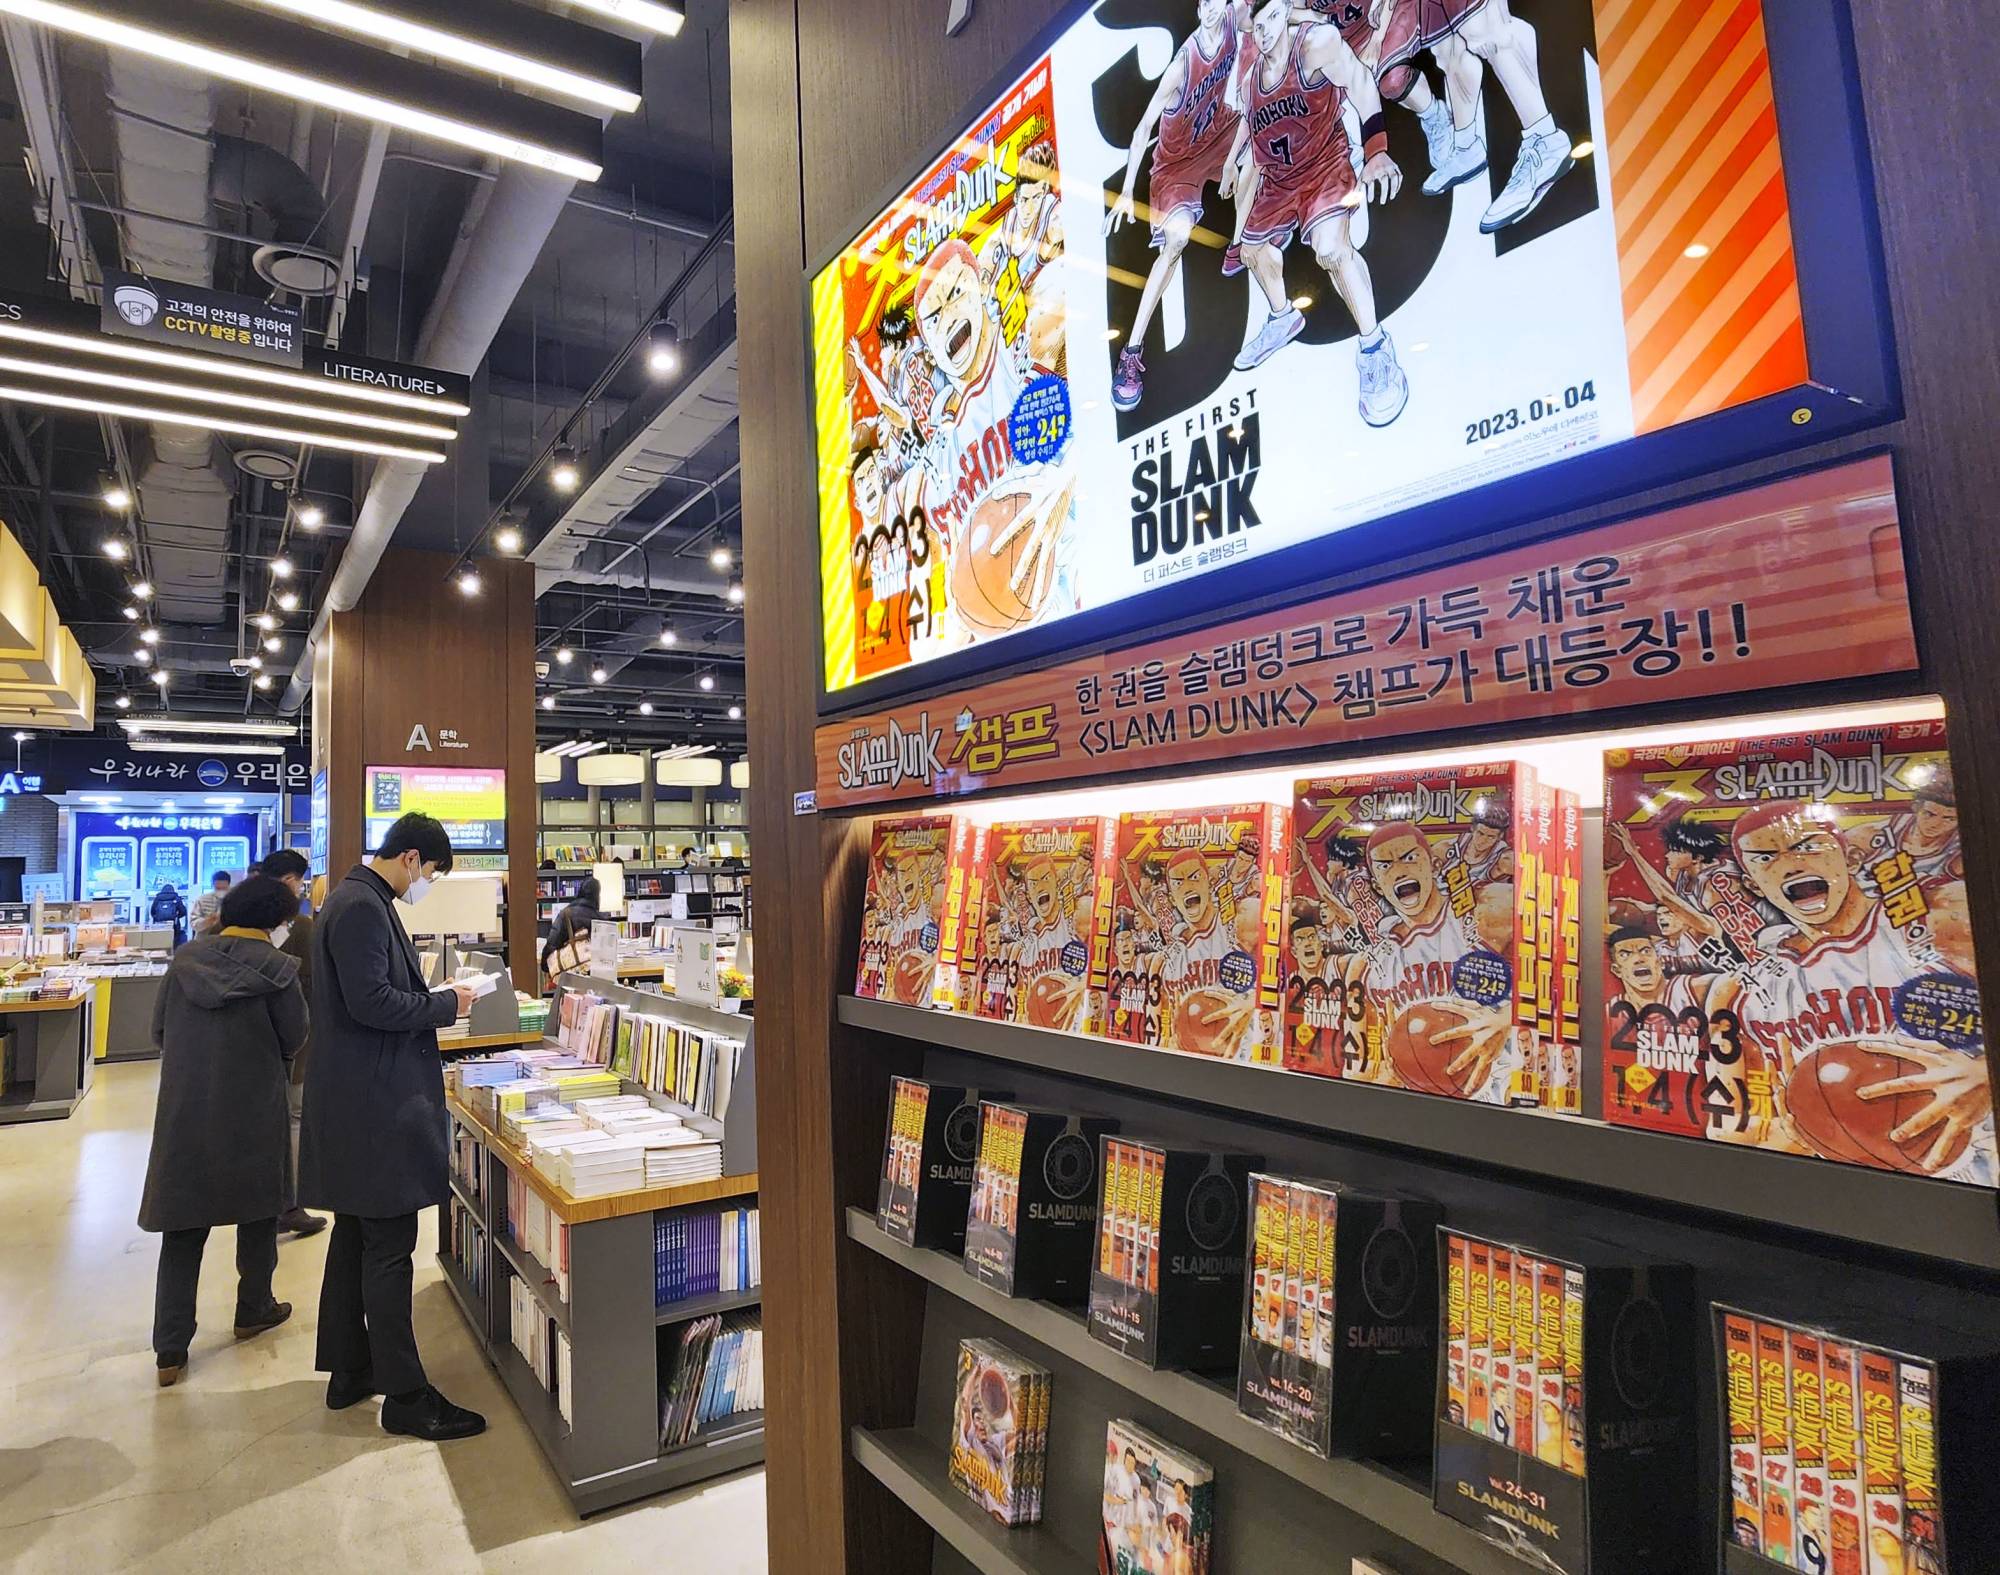 Japan anime 'First Slam Dunk' tops China Box Office｜Arab News Japan